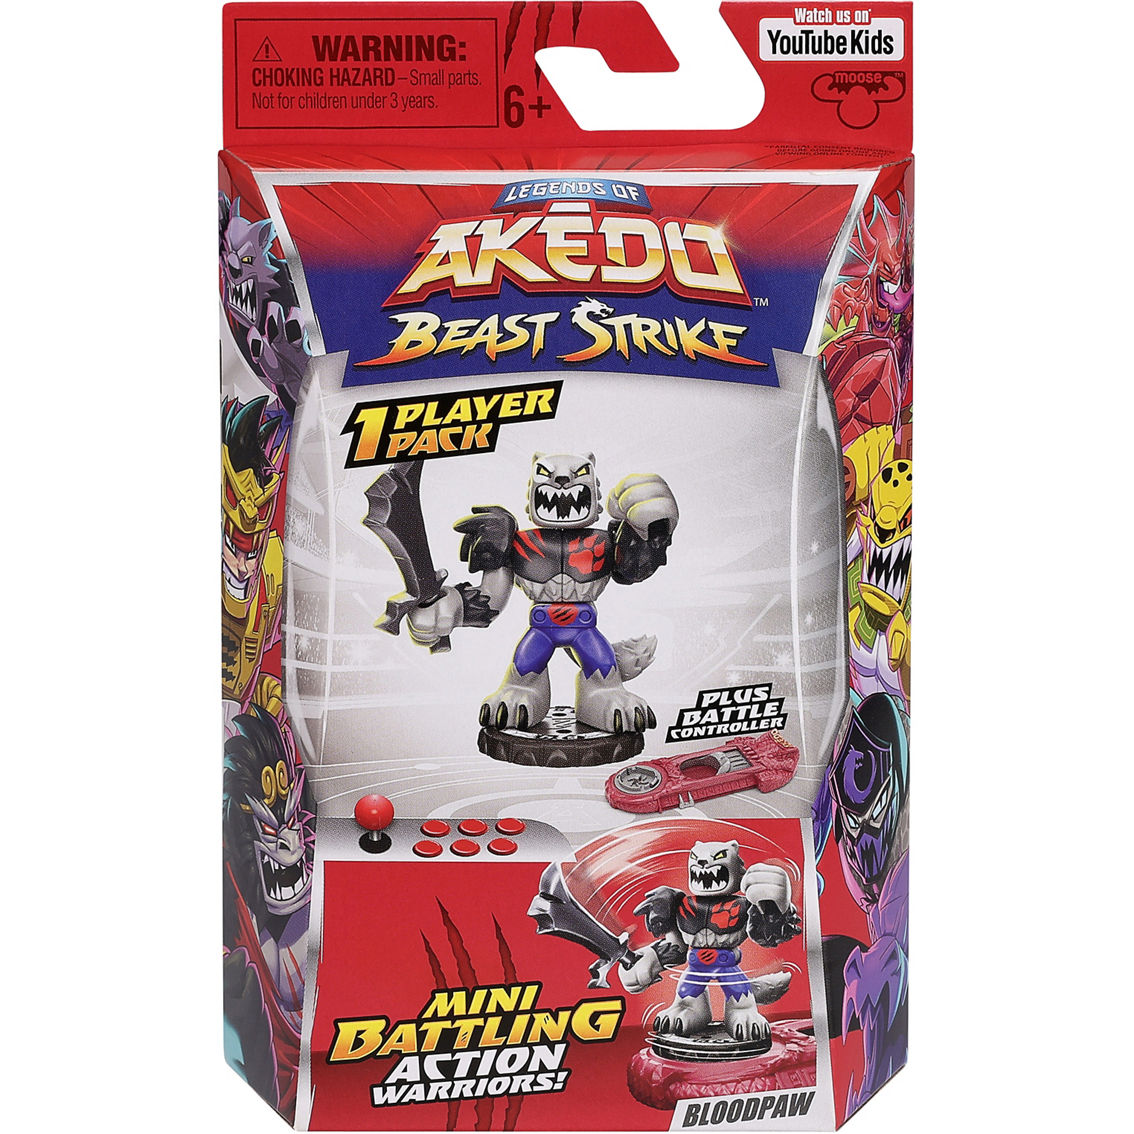 Legends of Akedo Beast Strike Stink King Mini Figure Single Pack - Image 2 of 9